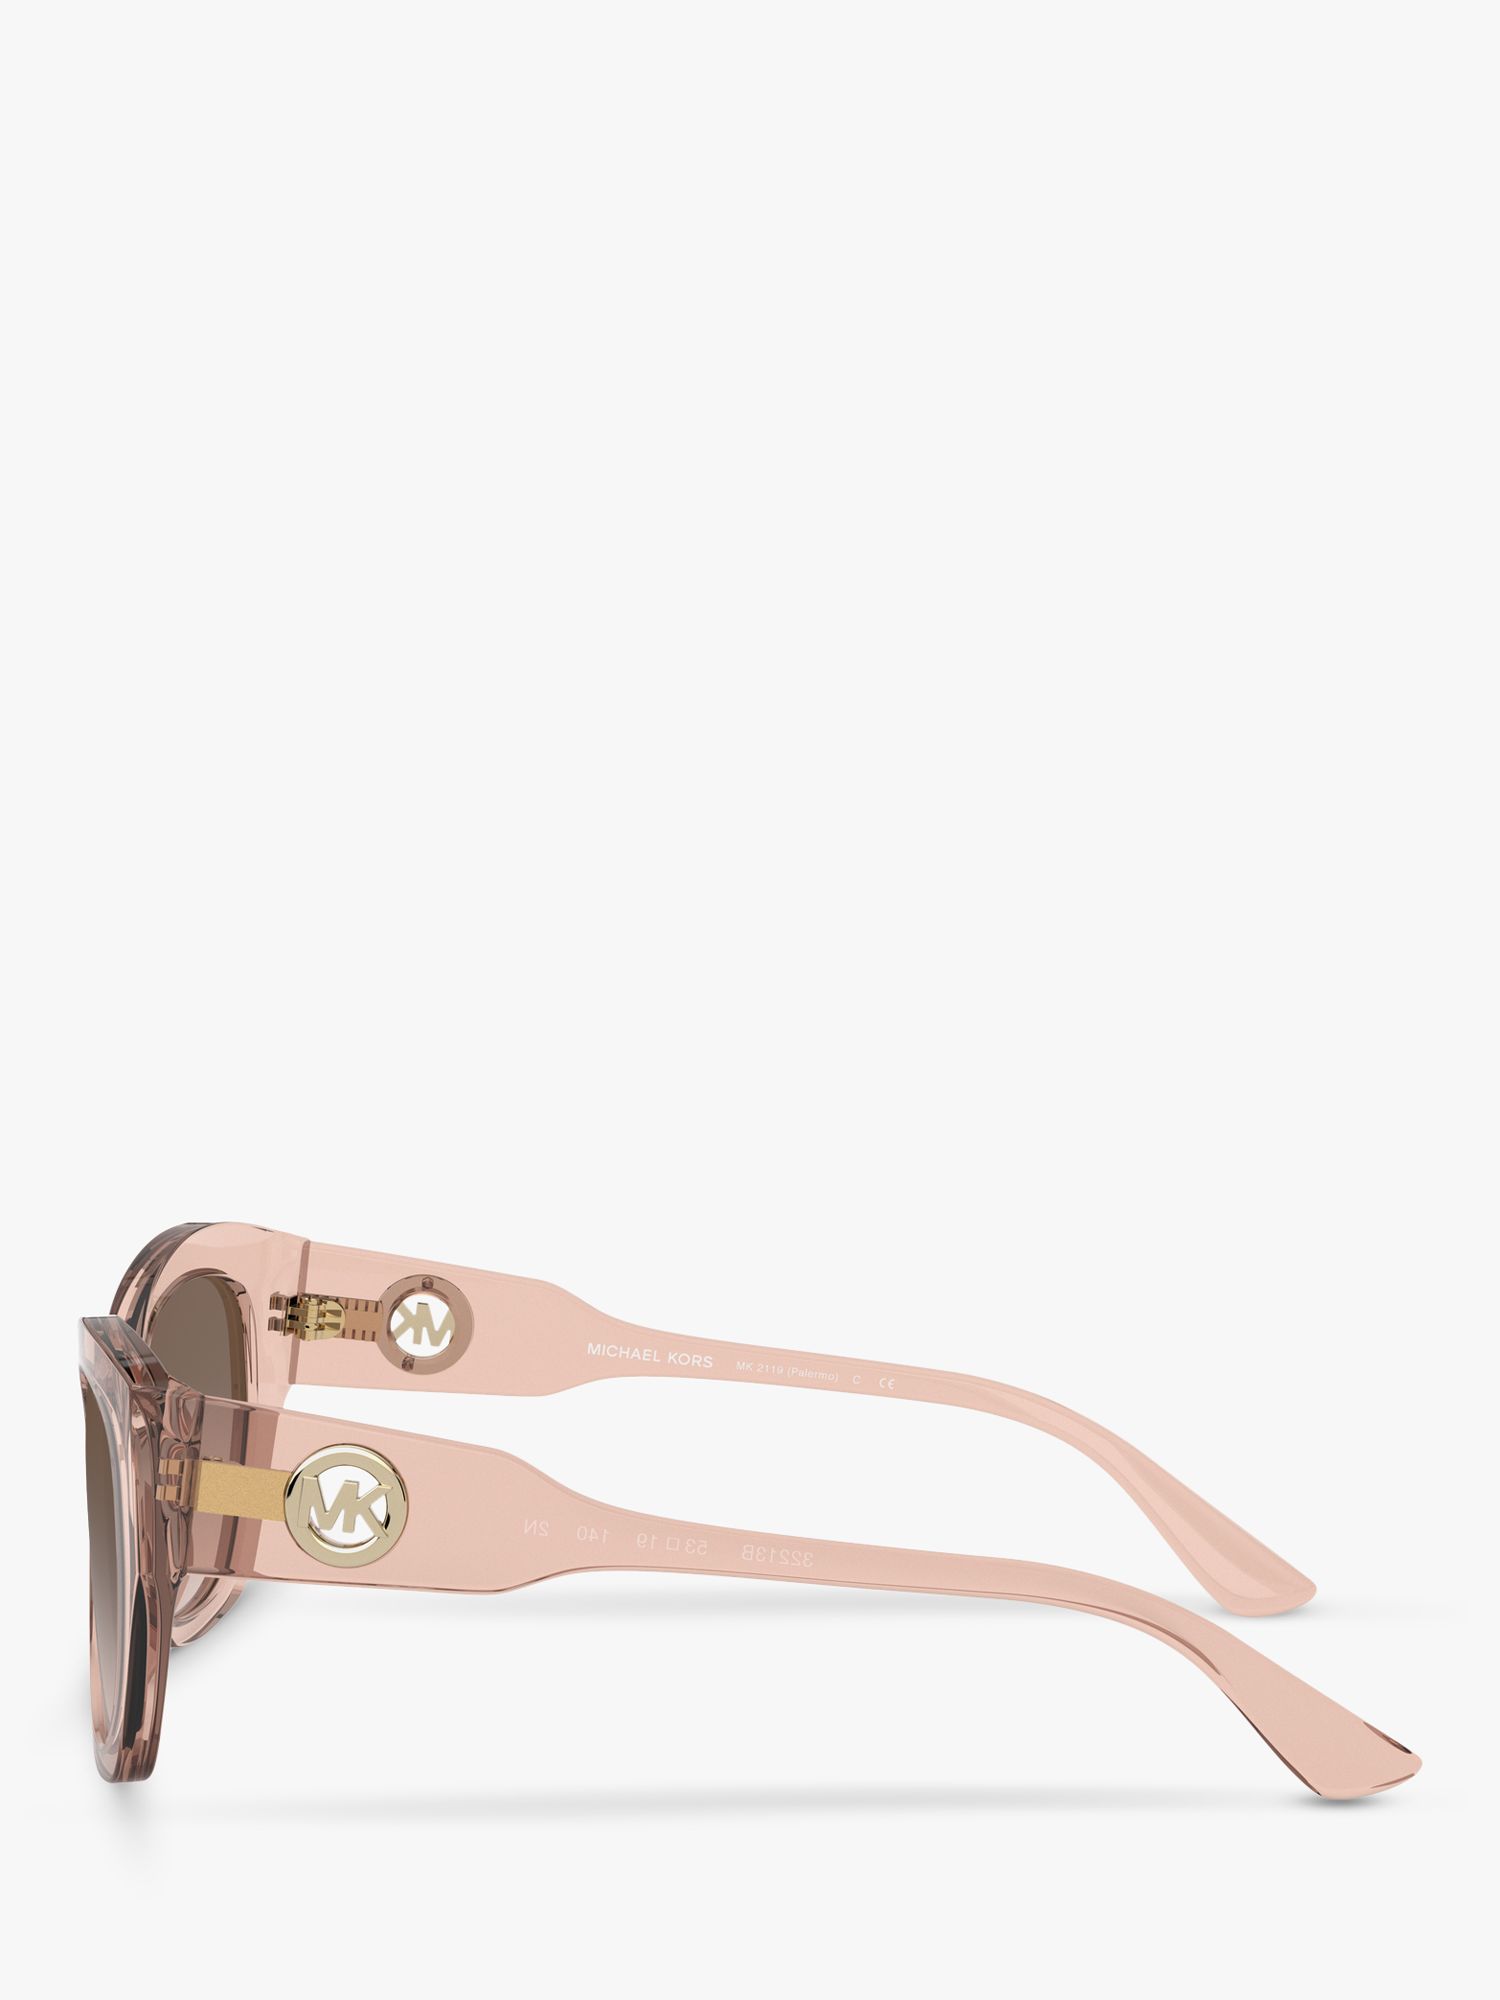 Michael Kors MK2119 Women's Palermo Square Sunglasses, Camila Rose Transparent/Brown Gradient